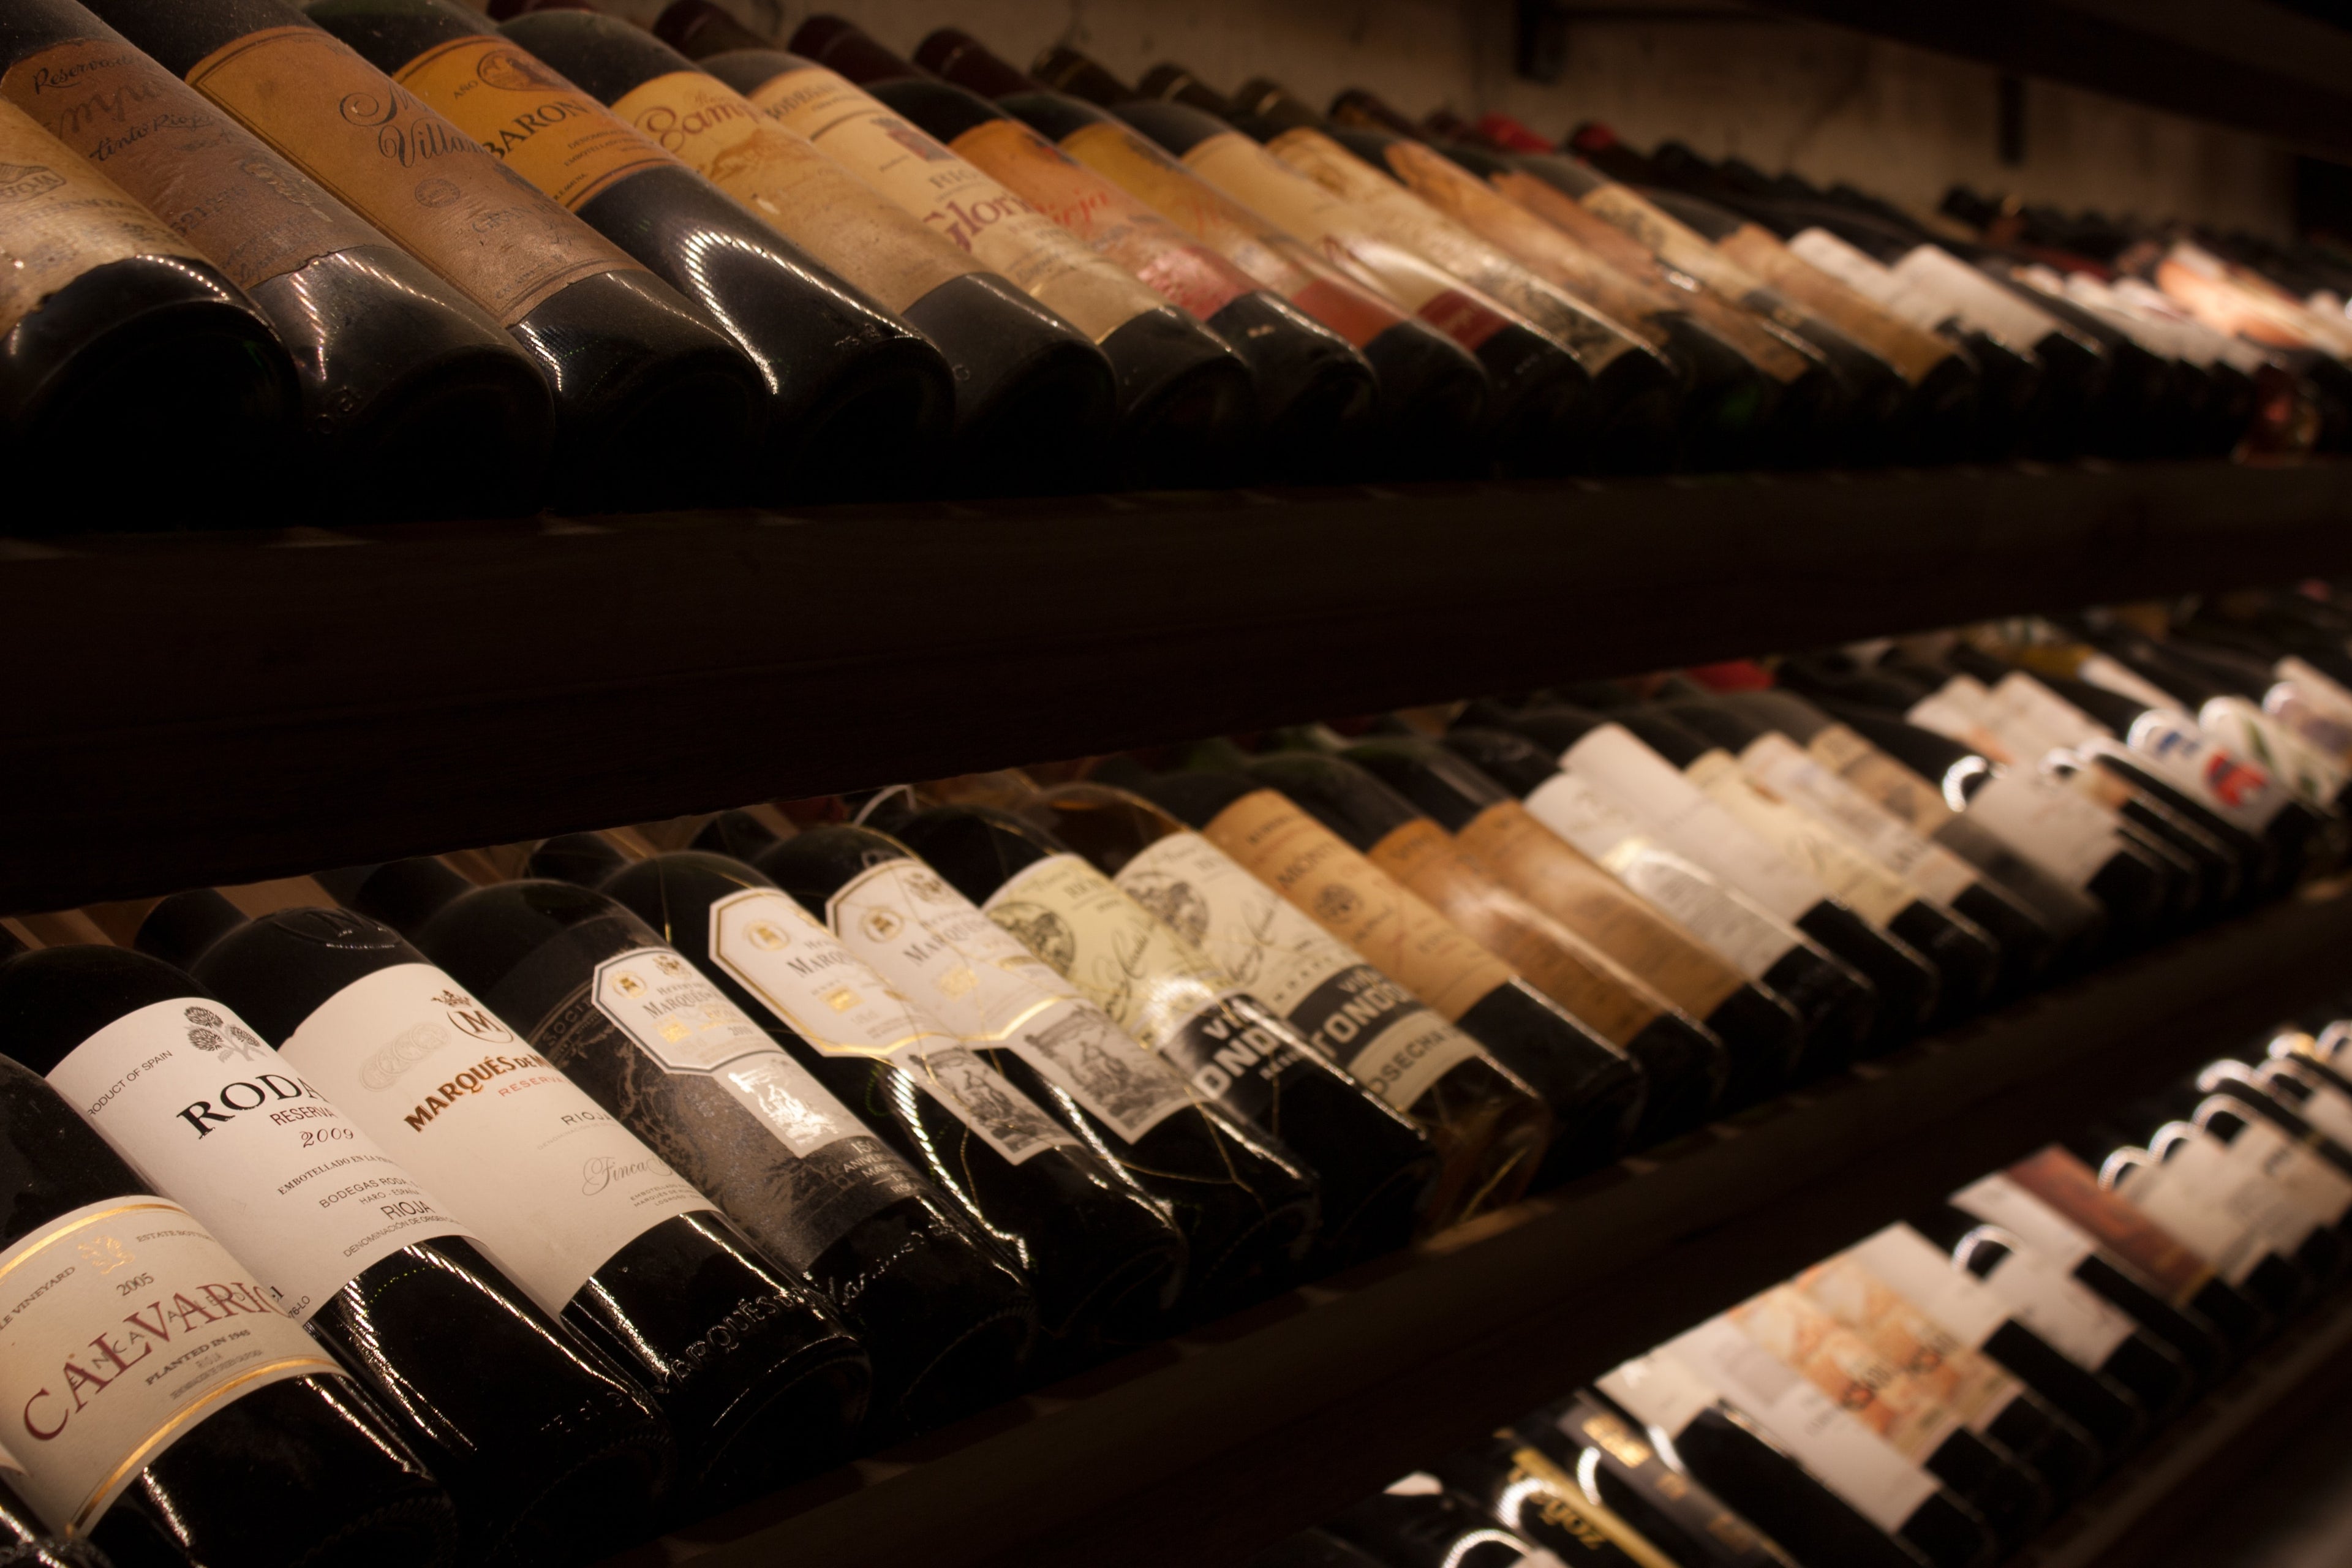 Wine bottles in cellar